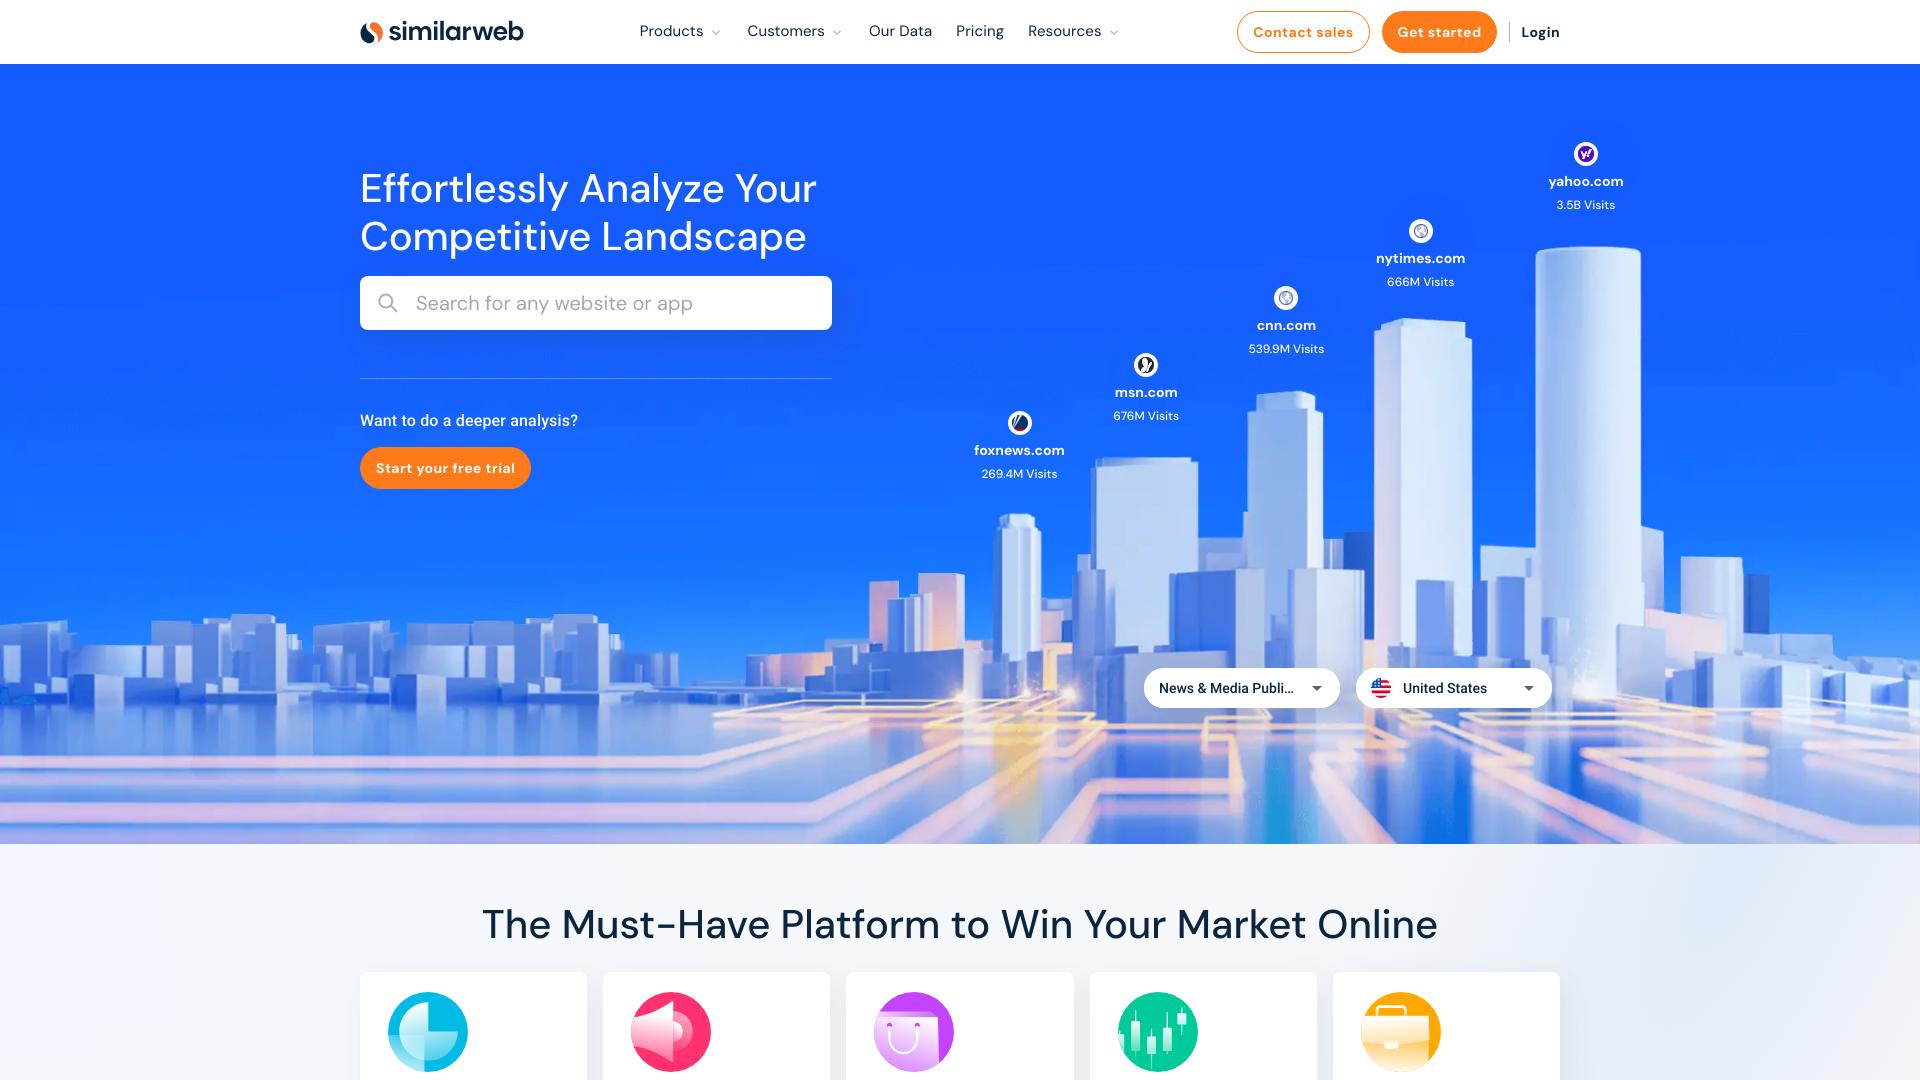 Similaweb-一个提供网站分析和竞争情报的平台